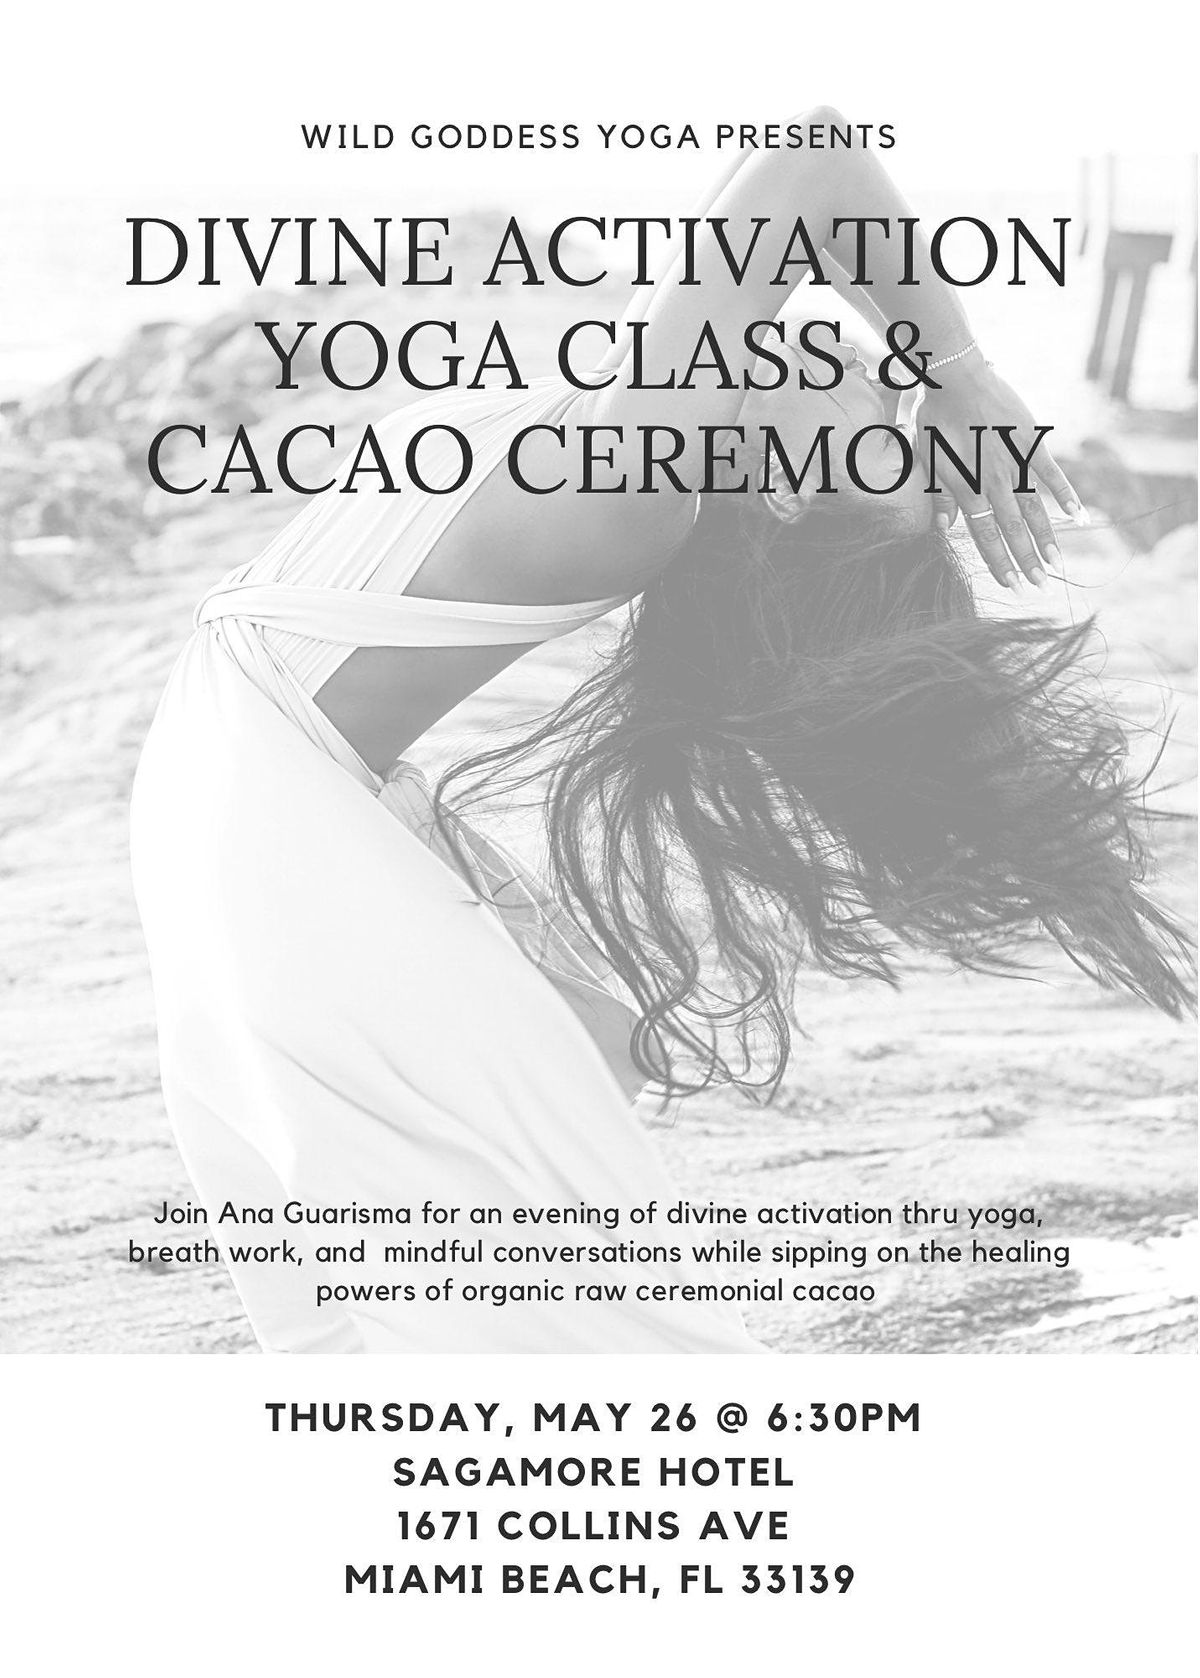 Divine Activation Yoga Class & Cacao Ceremony